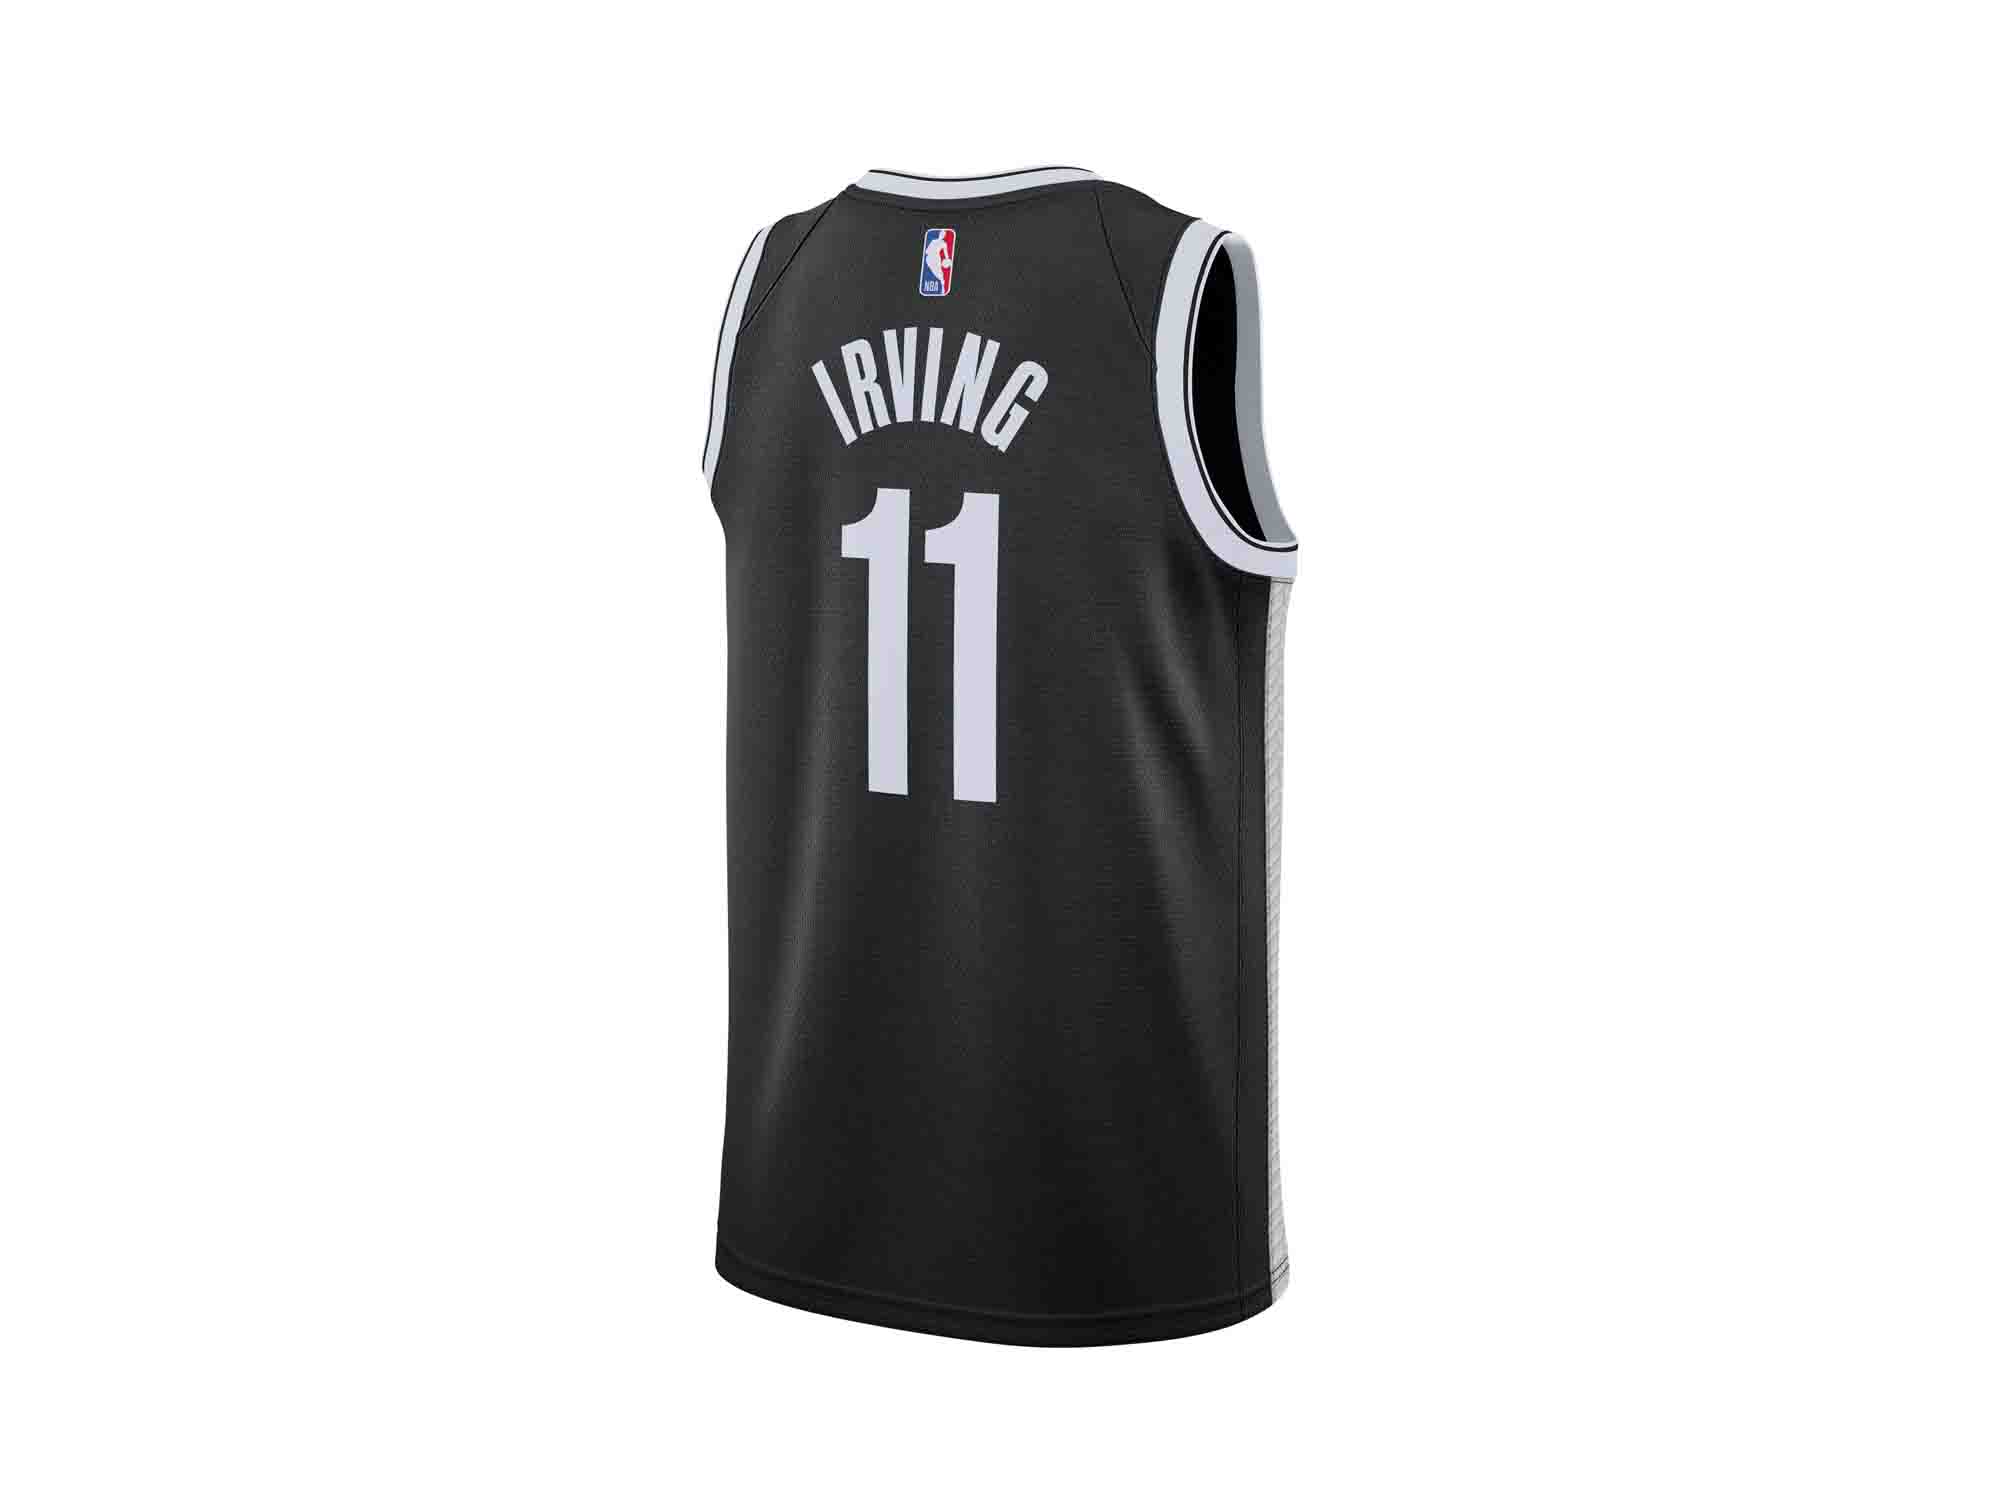 Nike Kyrie Irving NBA Icon Edition 2020 Swingman Jersey